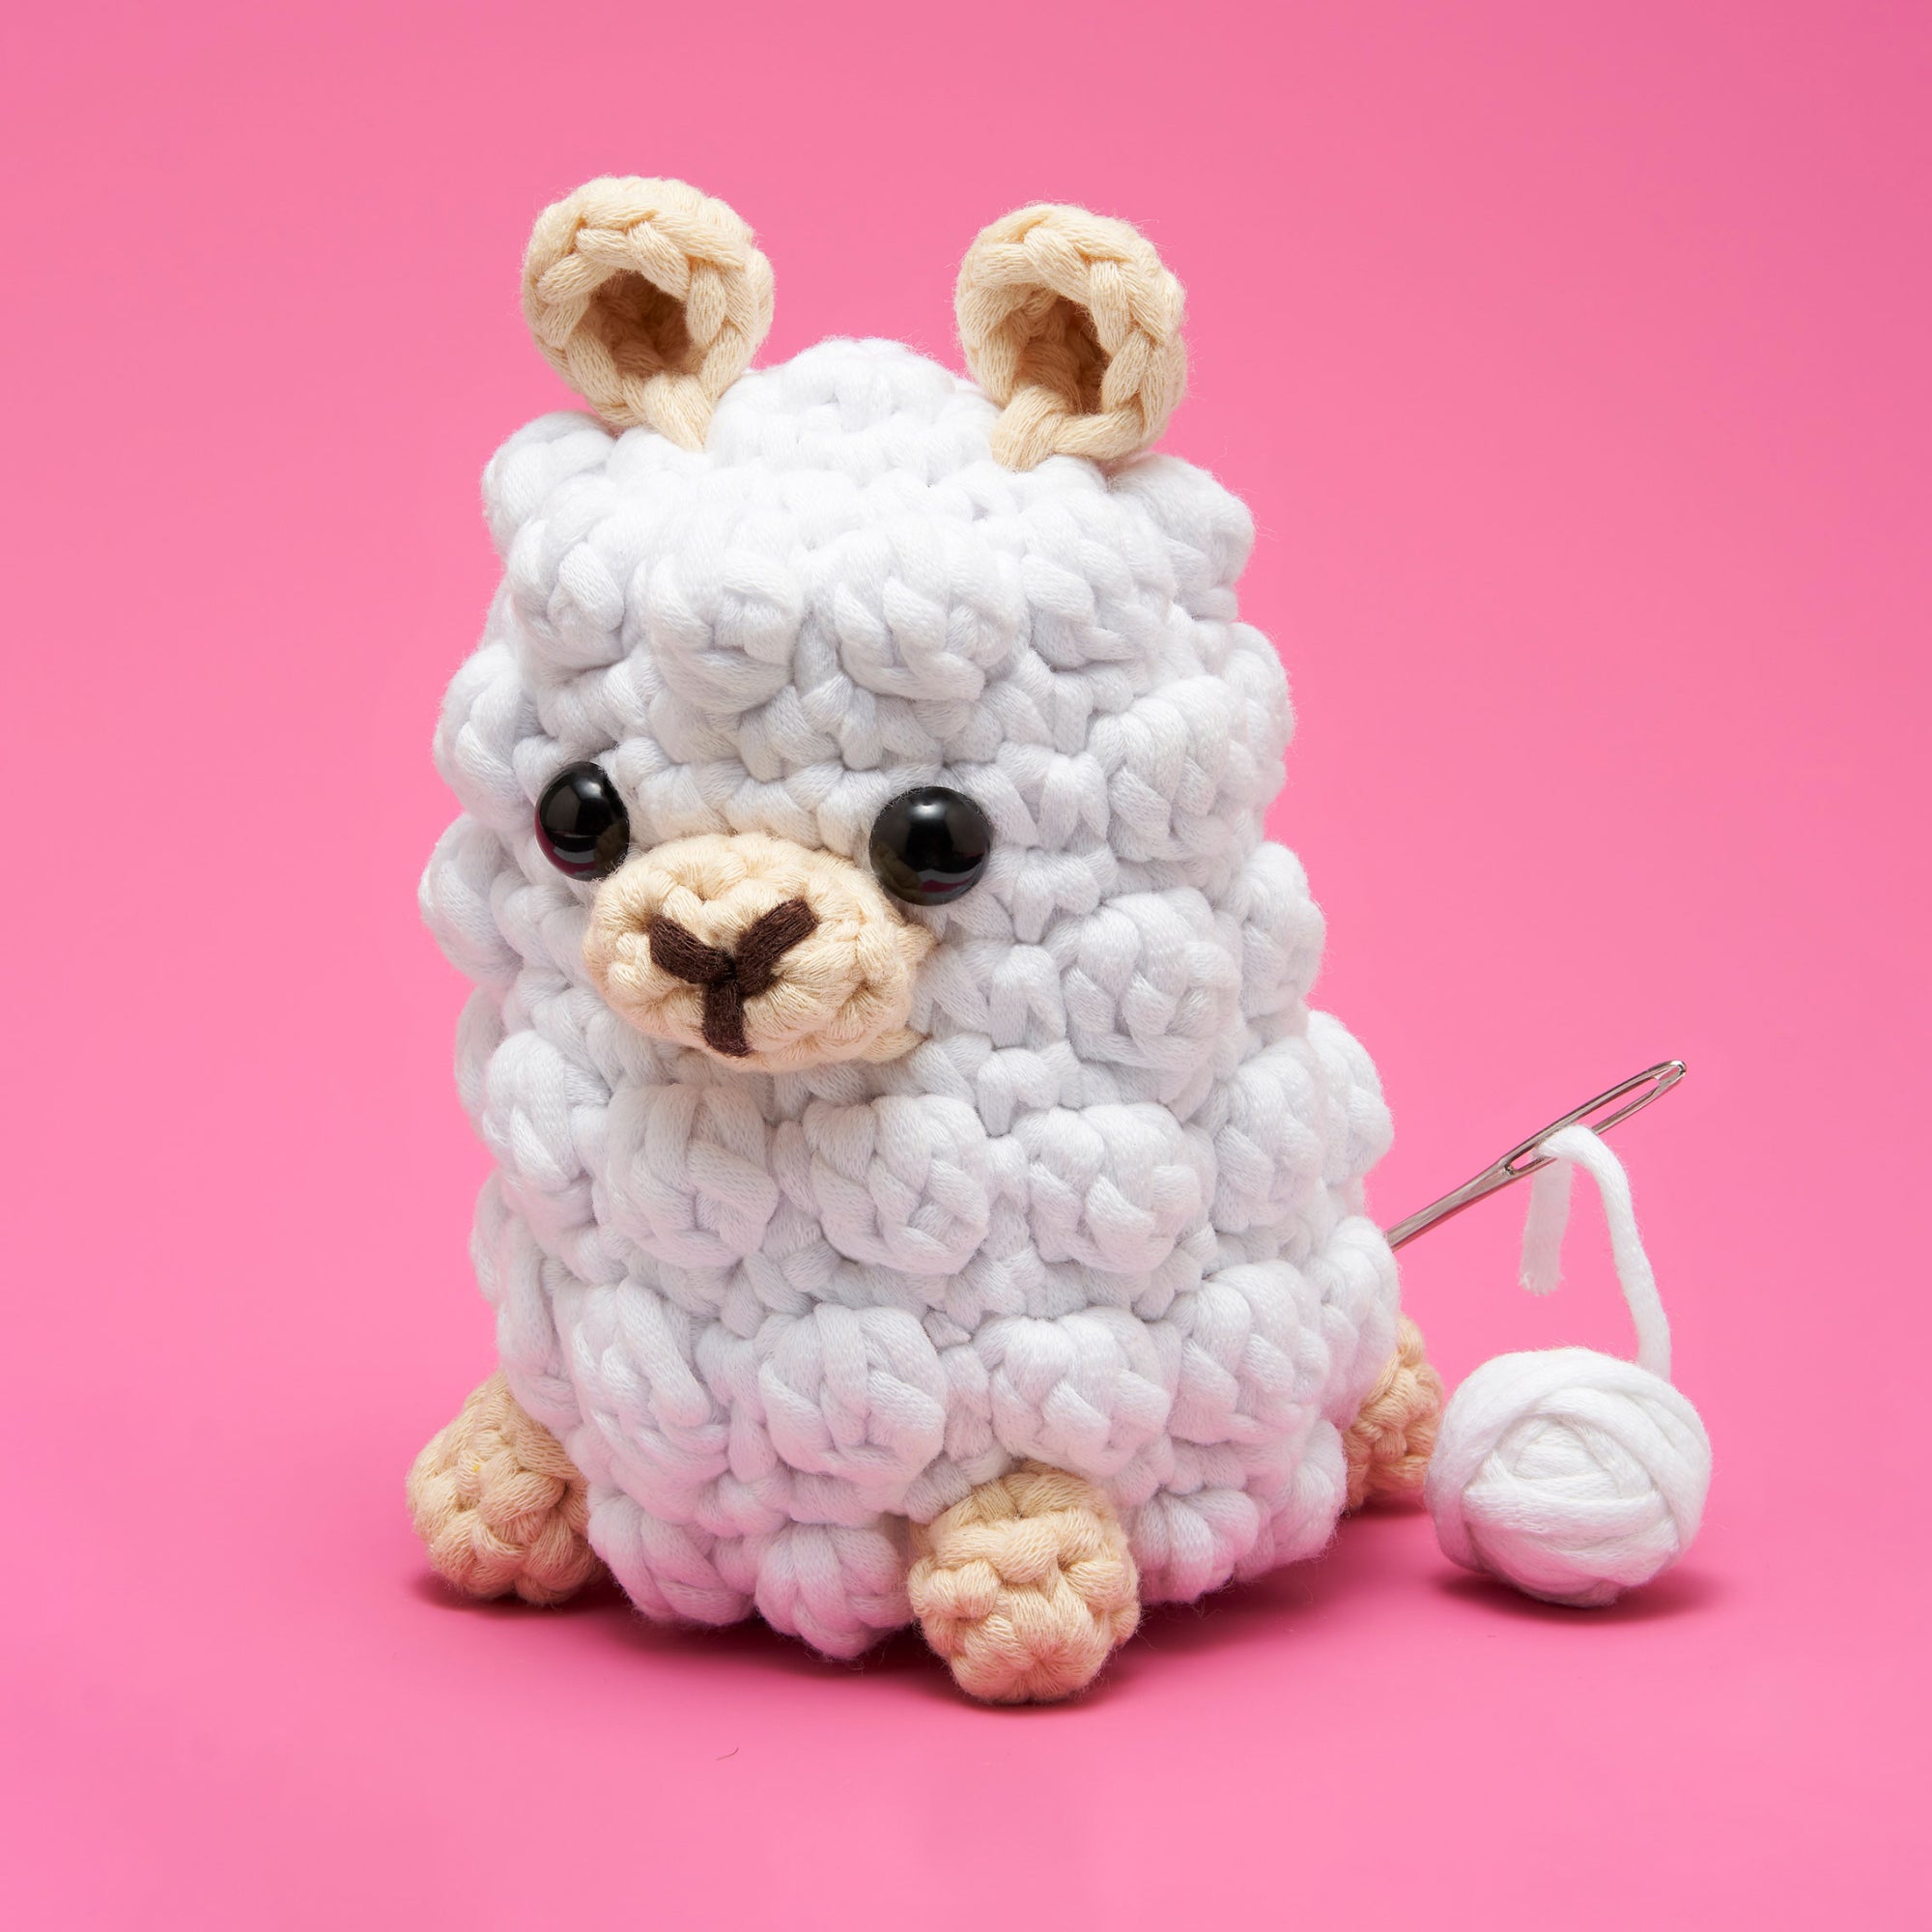 Llama Crochet Kit for Beginners